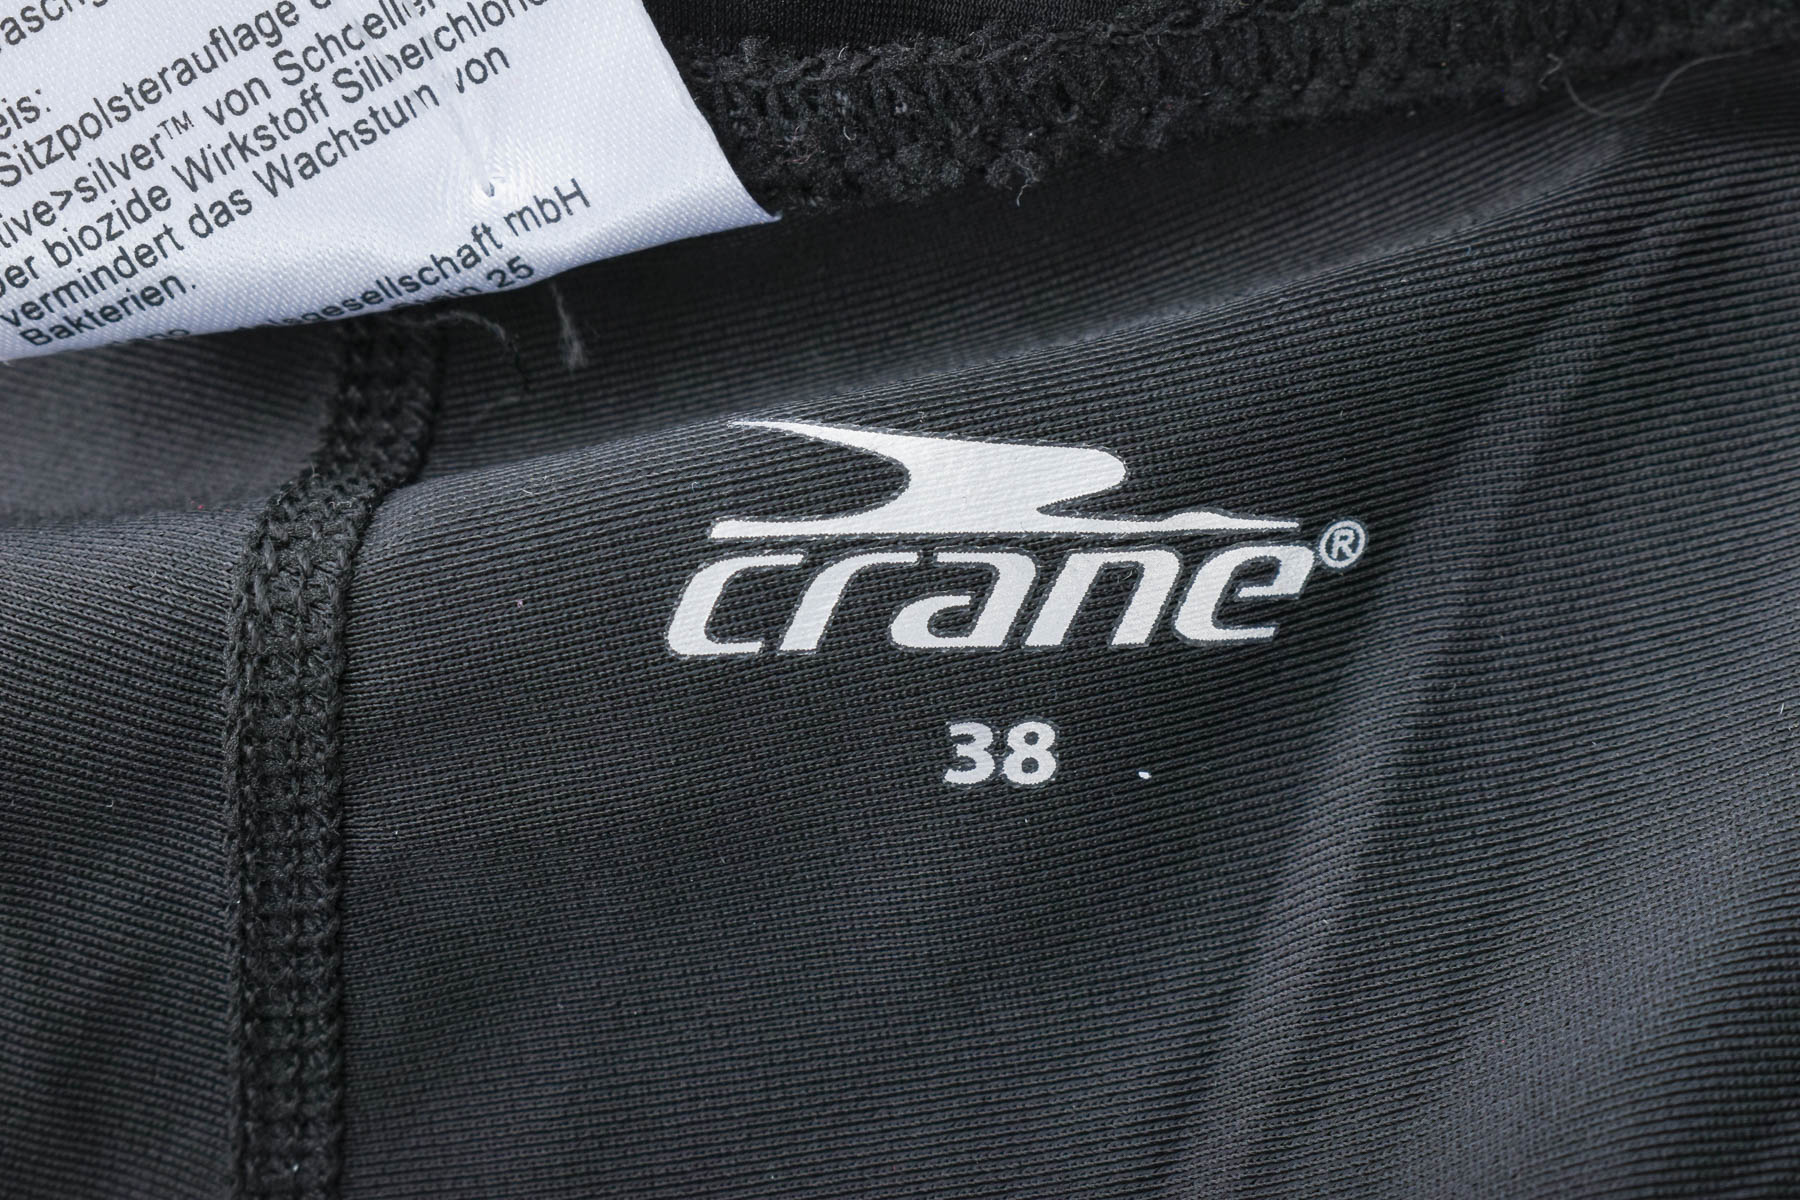 Women's cycling tights - Crane - 2